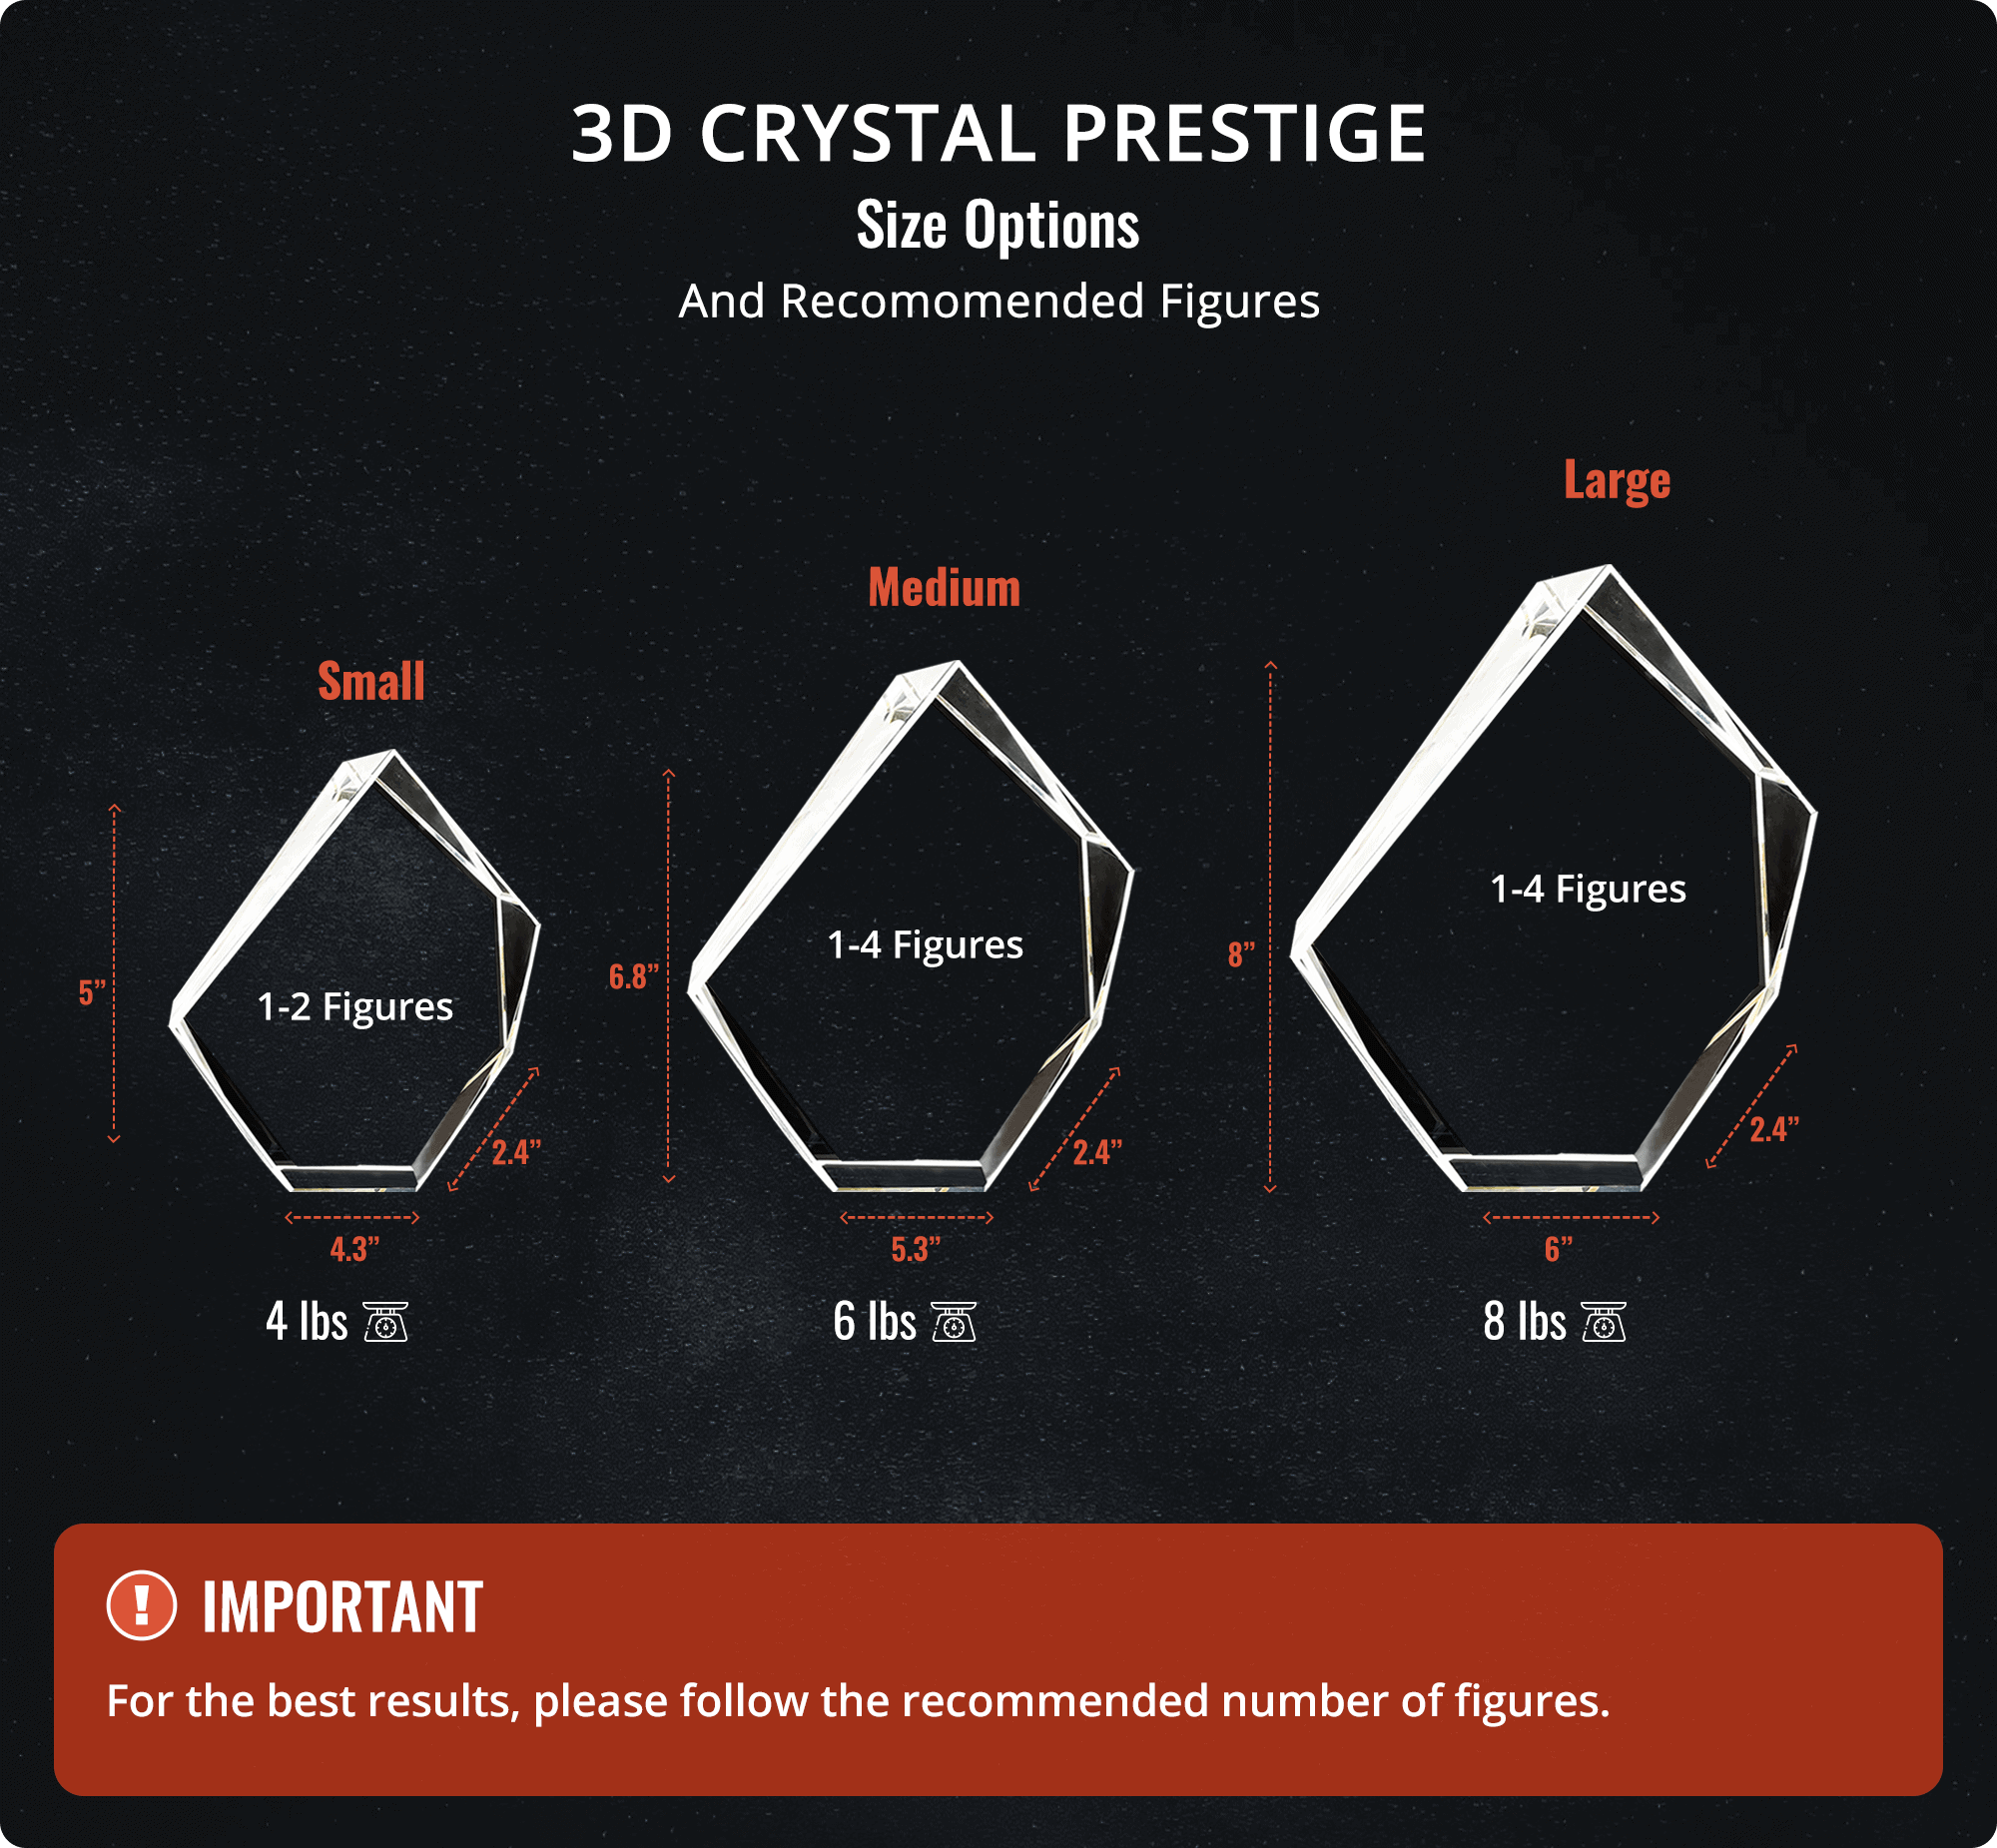 3D Crystal prestige